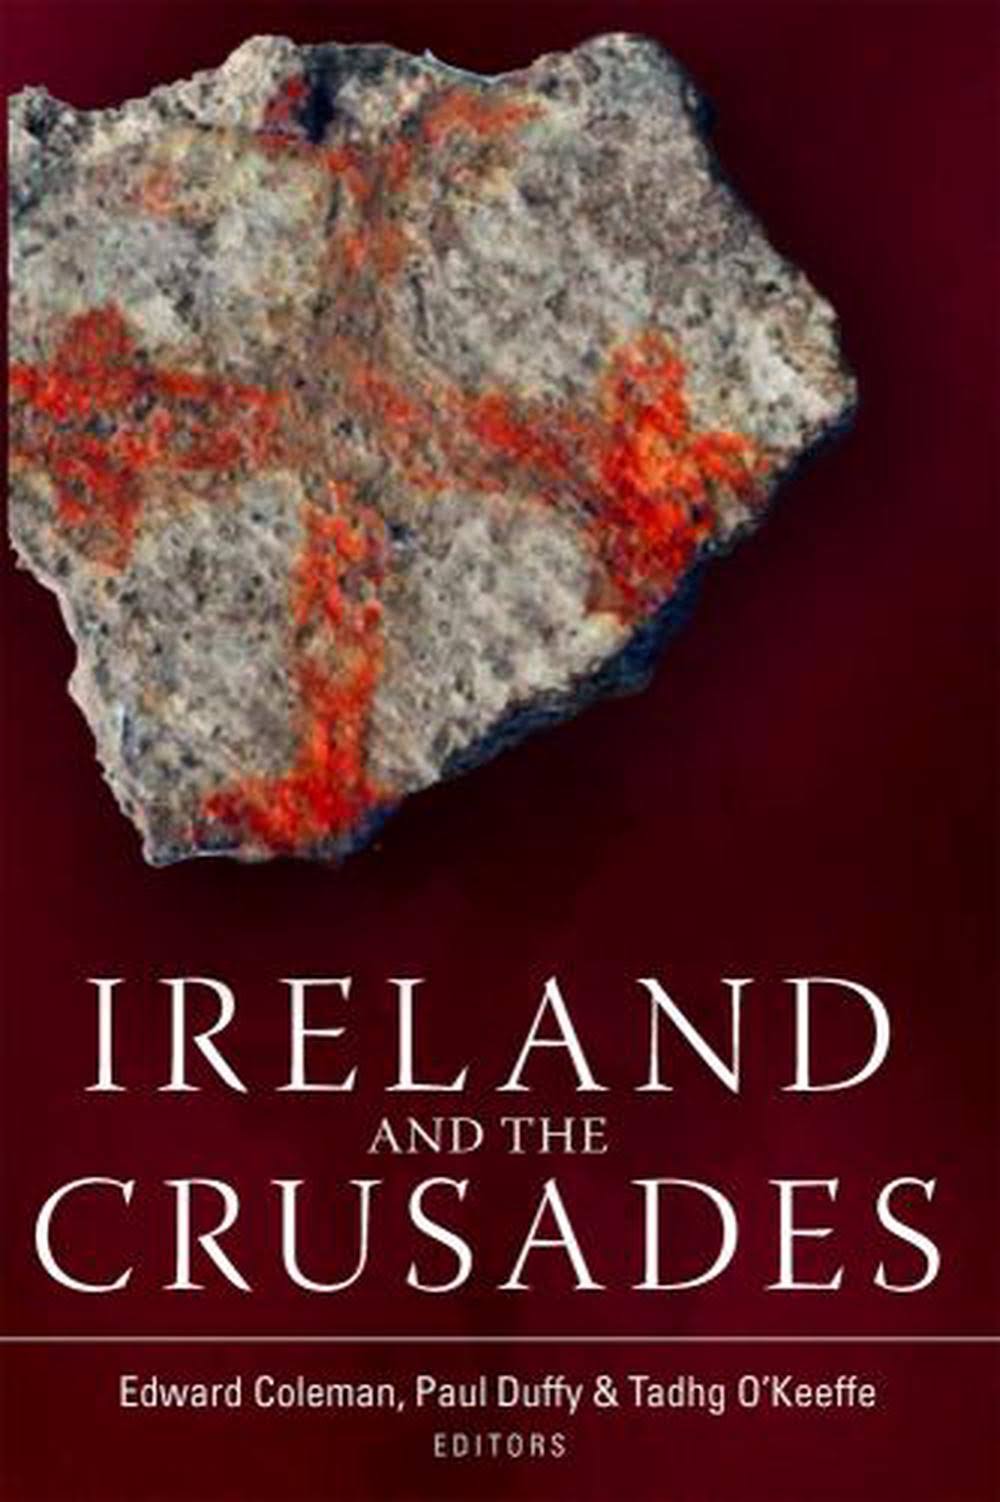 Ireland and the Crusades [Book]